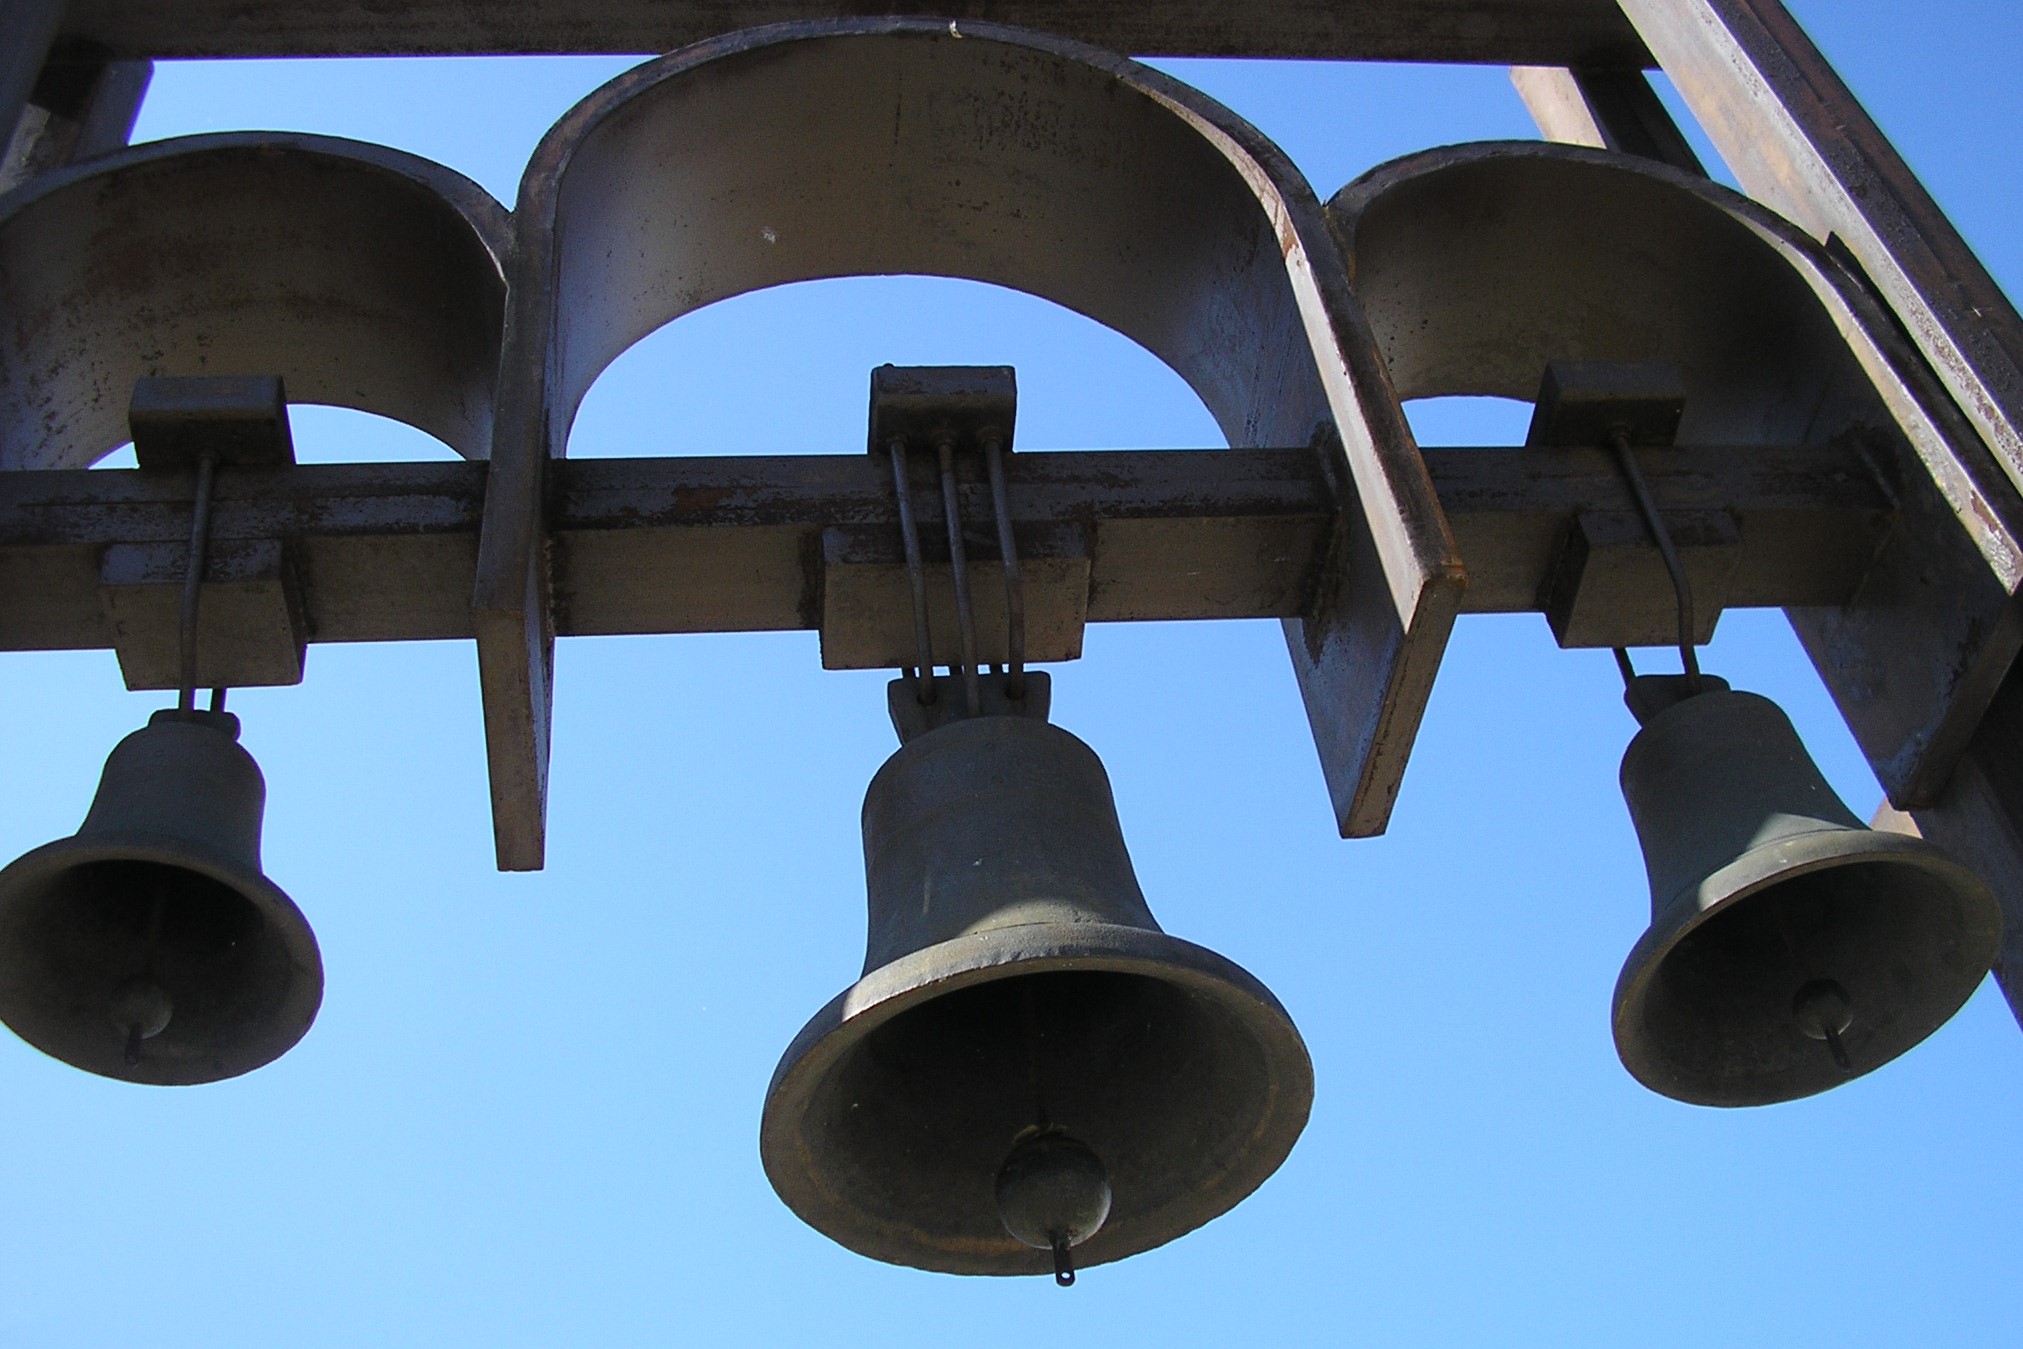 Three church bells ringing against a blue sky.